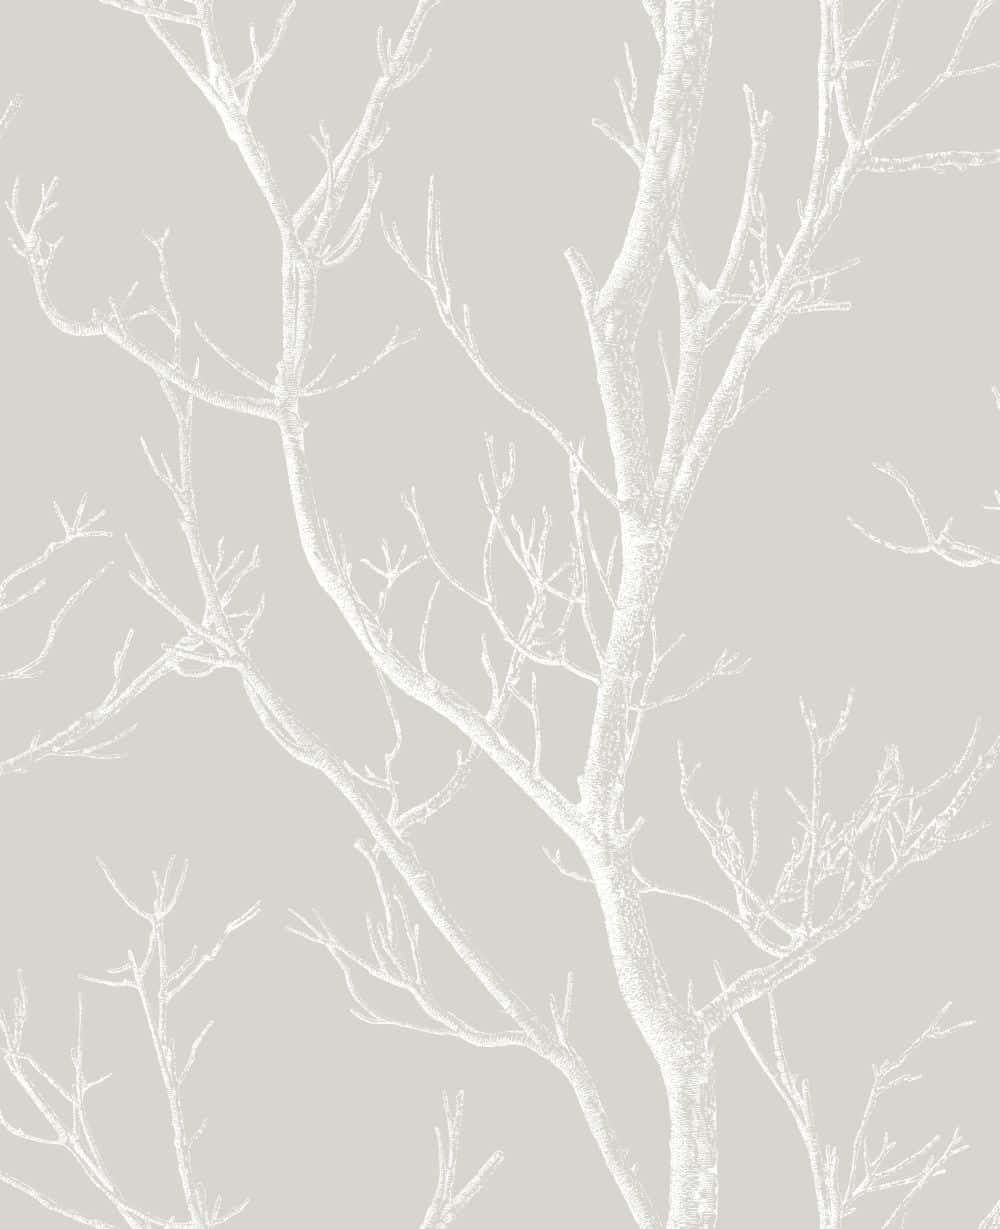 White Bare Tree Branches Digital Illustration Wallpaper